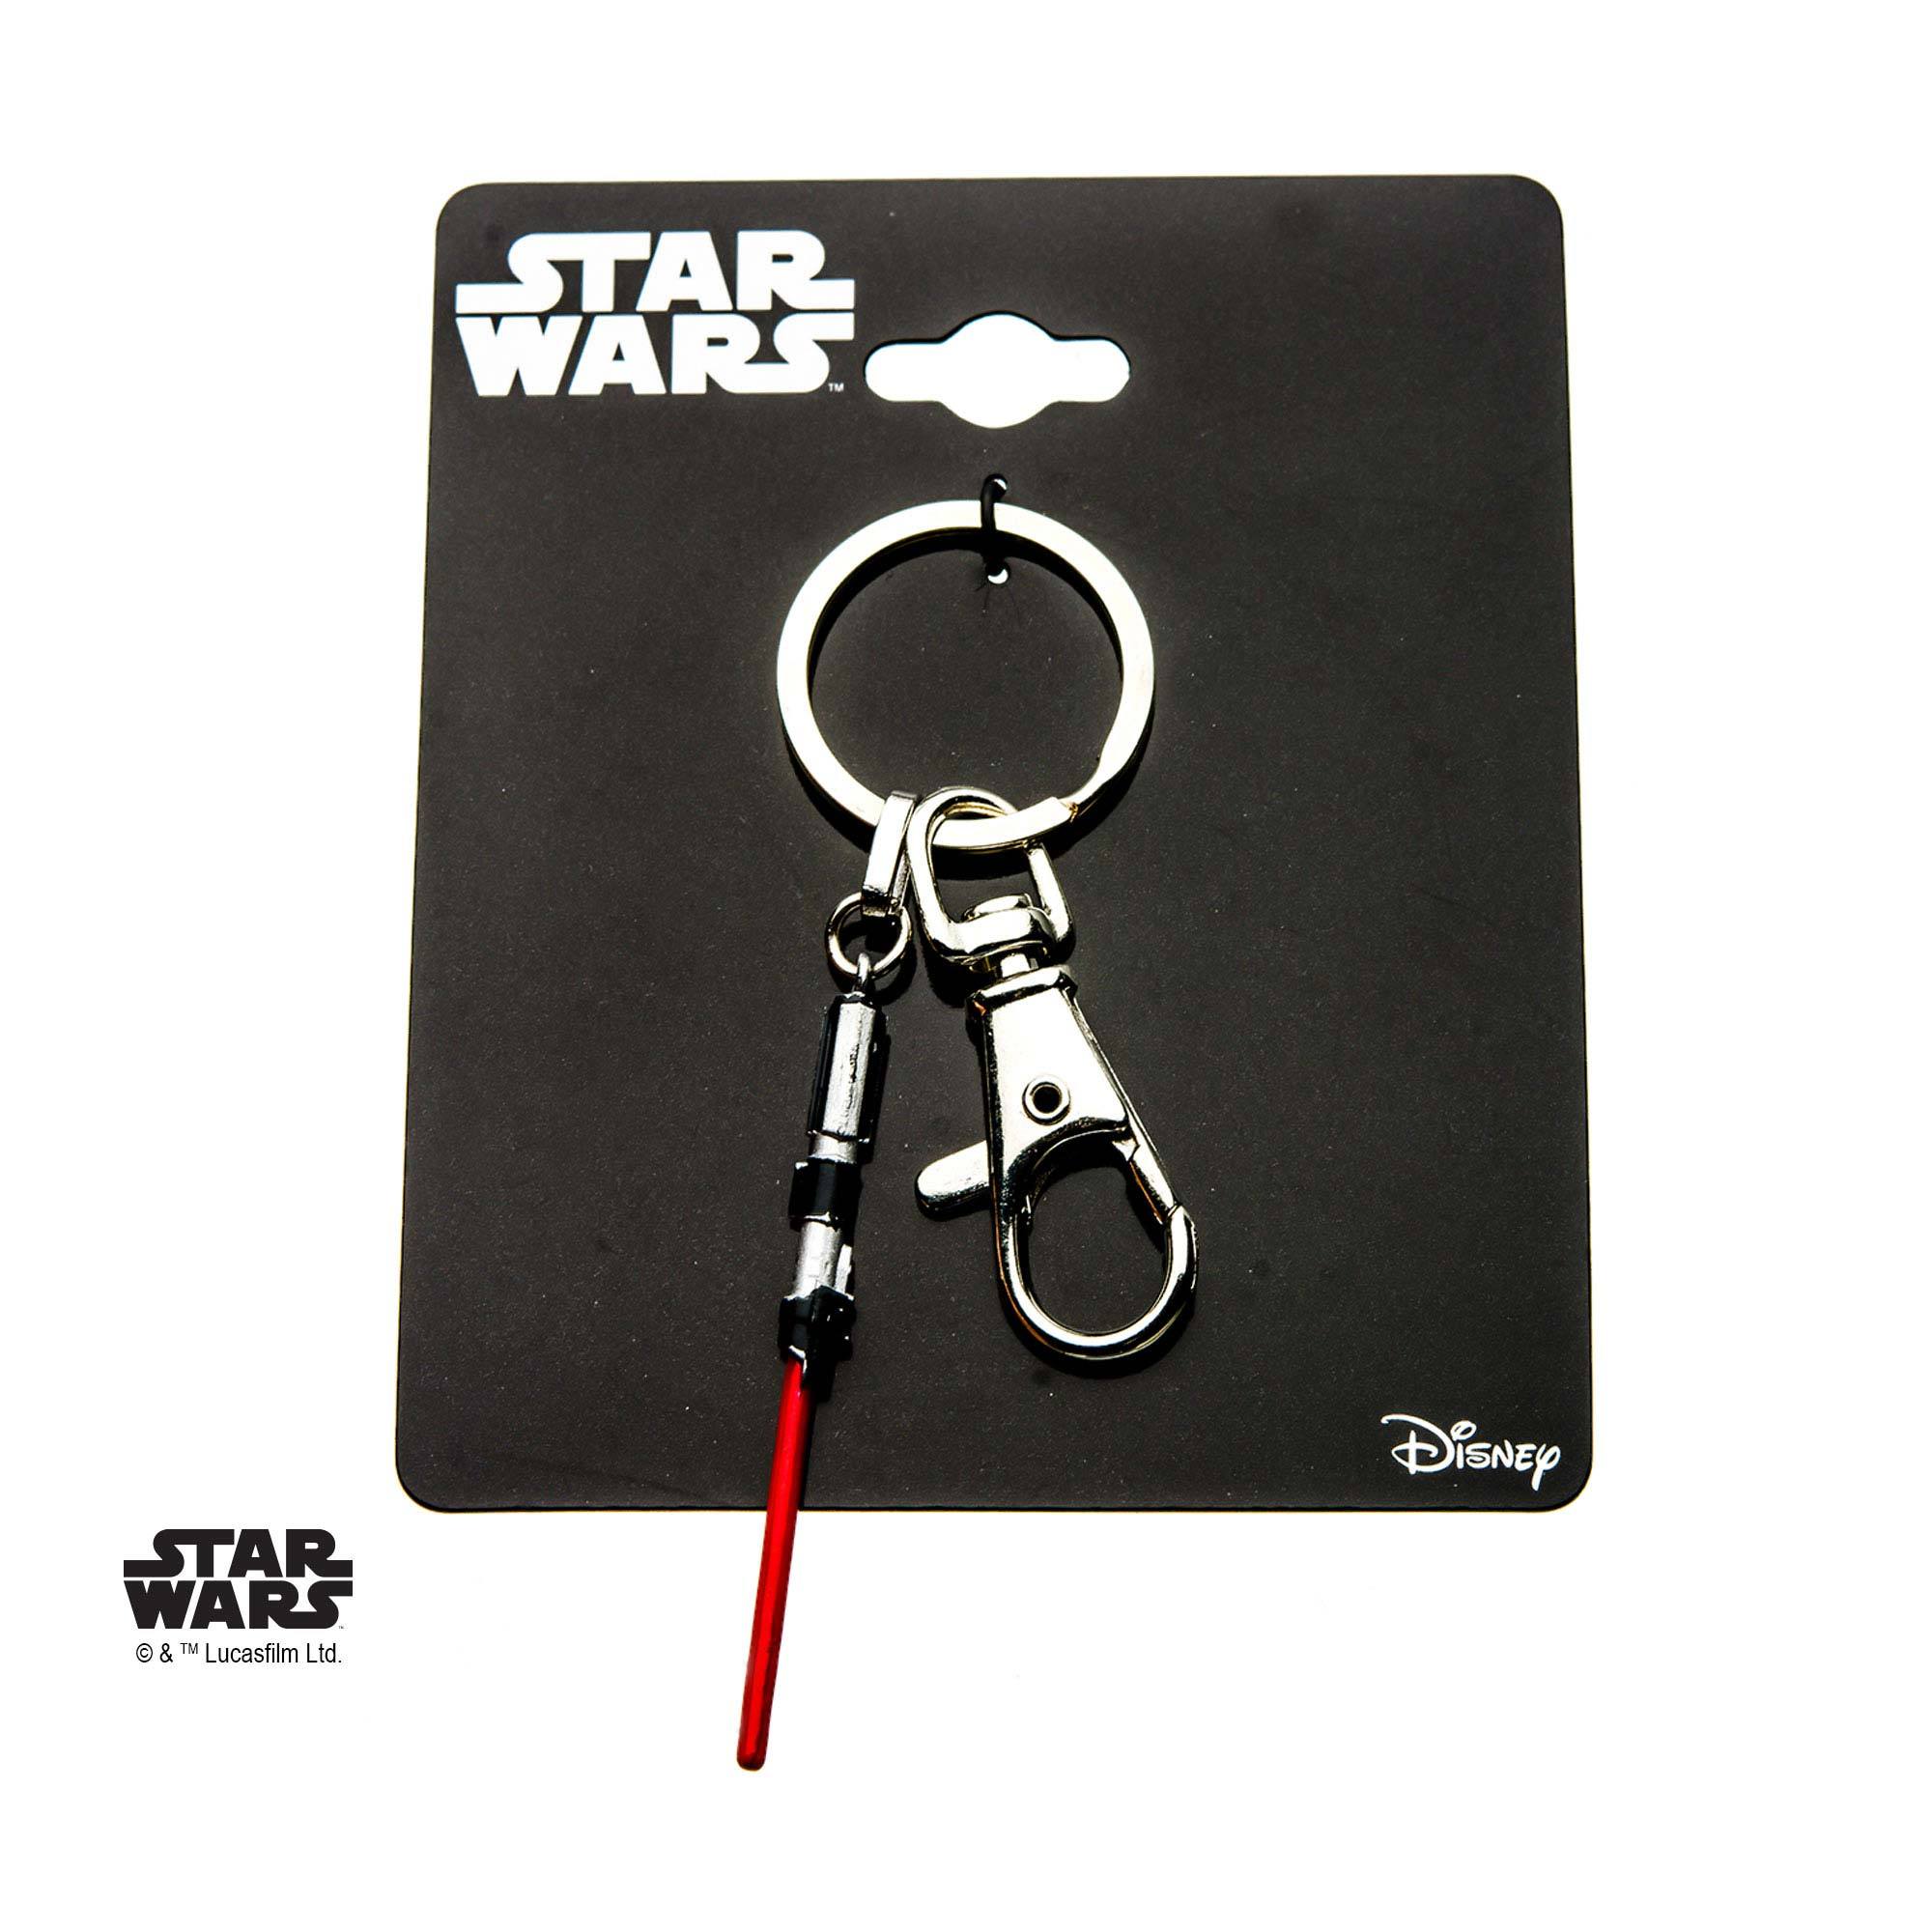 Star Wars Darth Vader Lightsaber Keychain